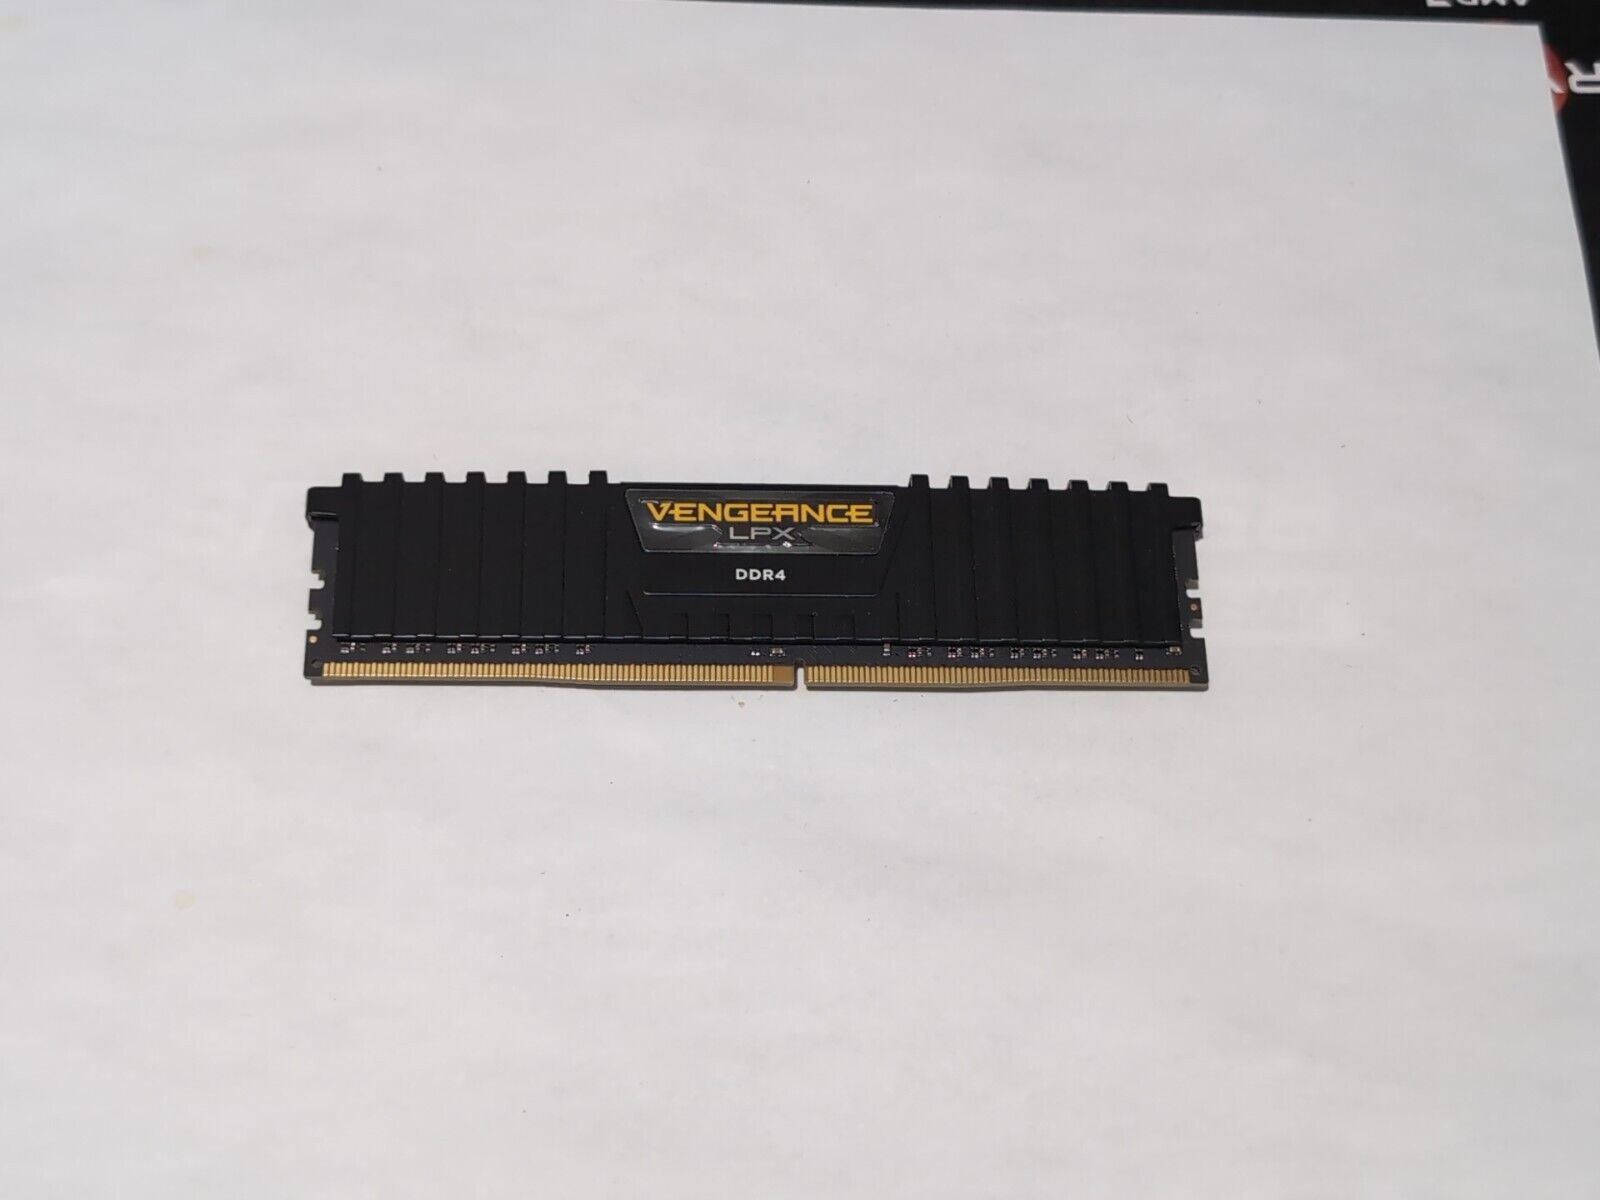 Corsair Vengeance LPX 16GB (2x8GB) DDR4 DRAM 3000MHz C15 Memory Kit - Black...